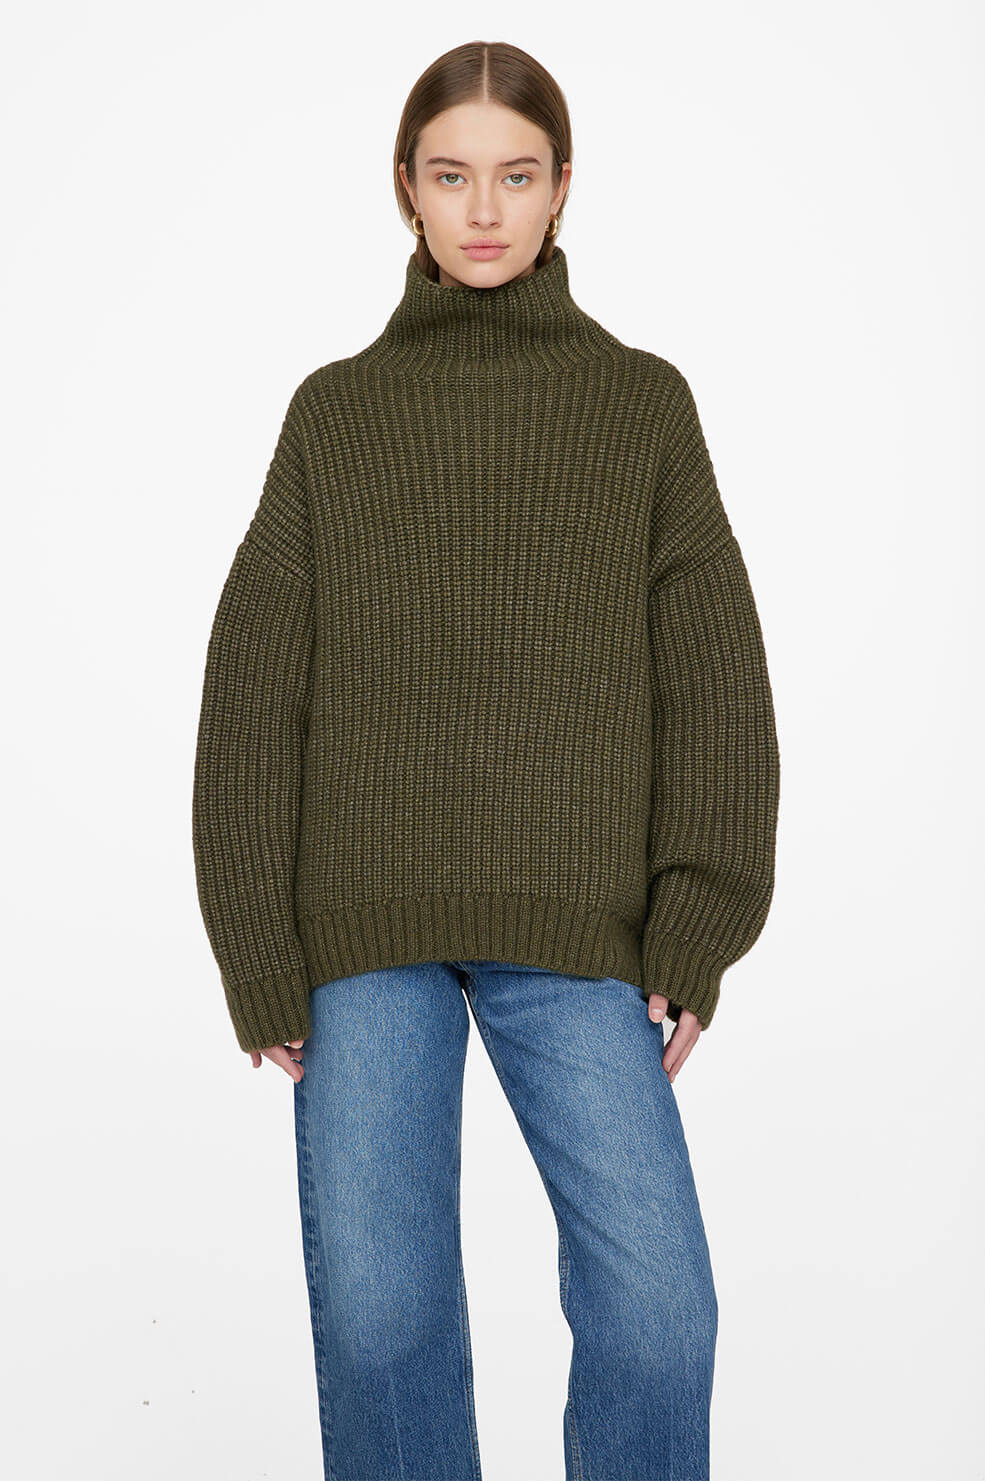 Anine Bing - Sydney Sweater in Olive